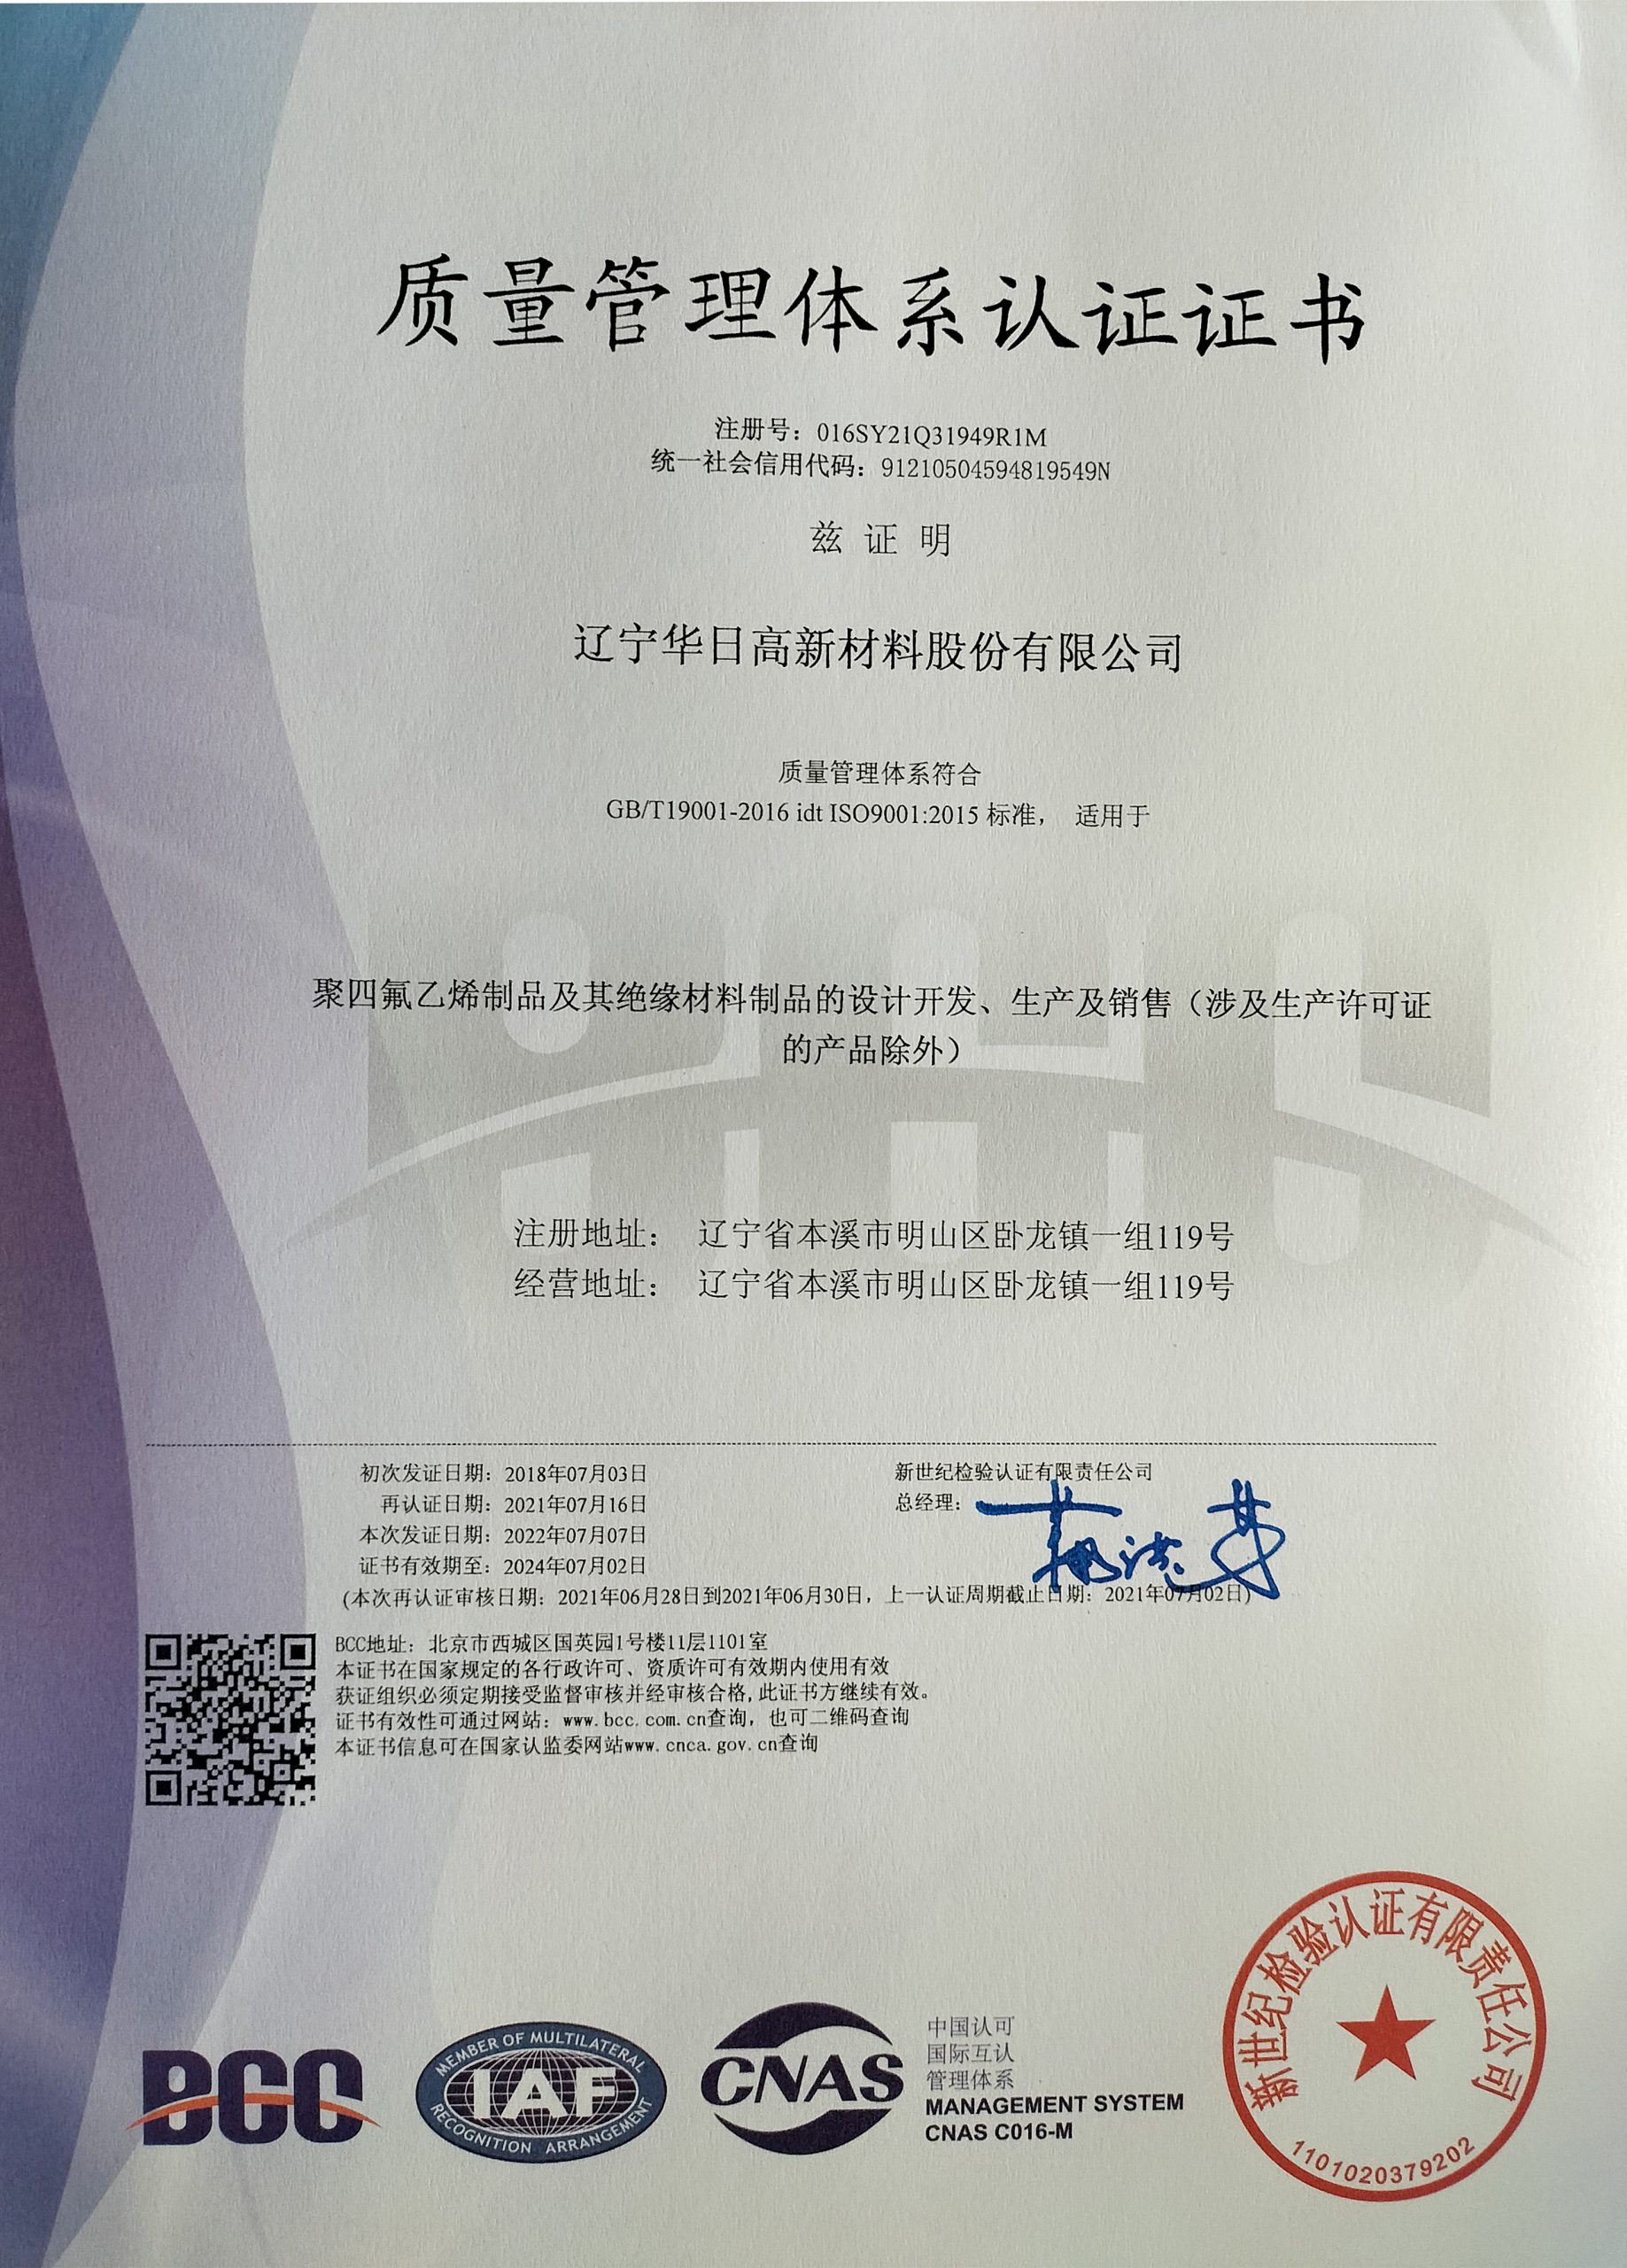 Enterprise Quality System Certificate